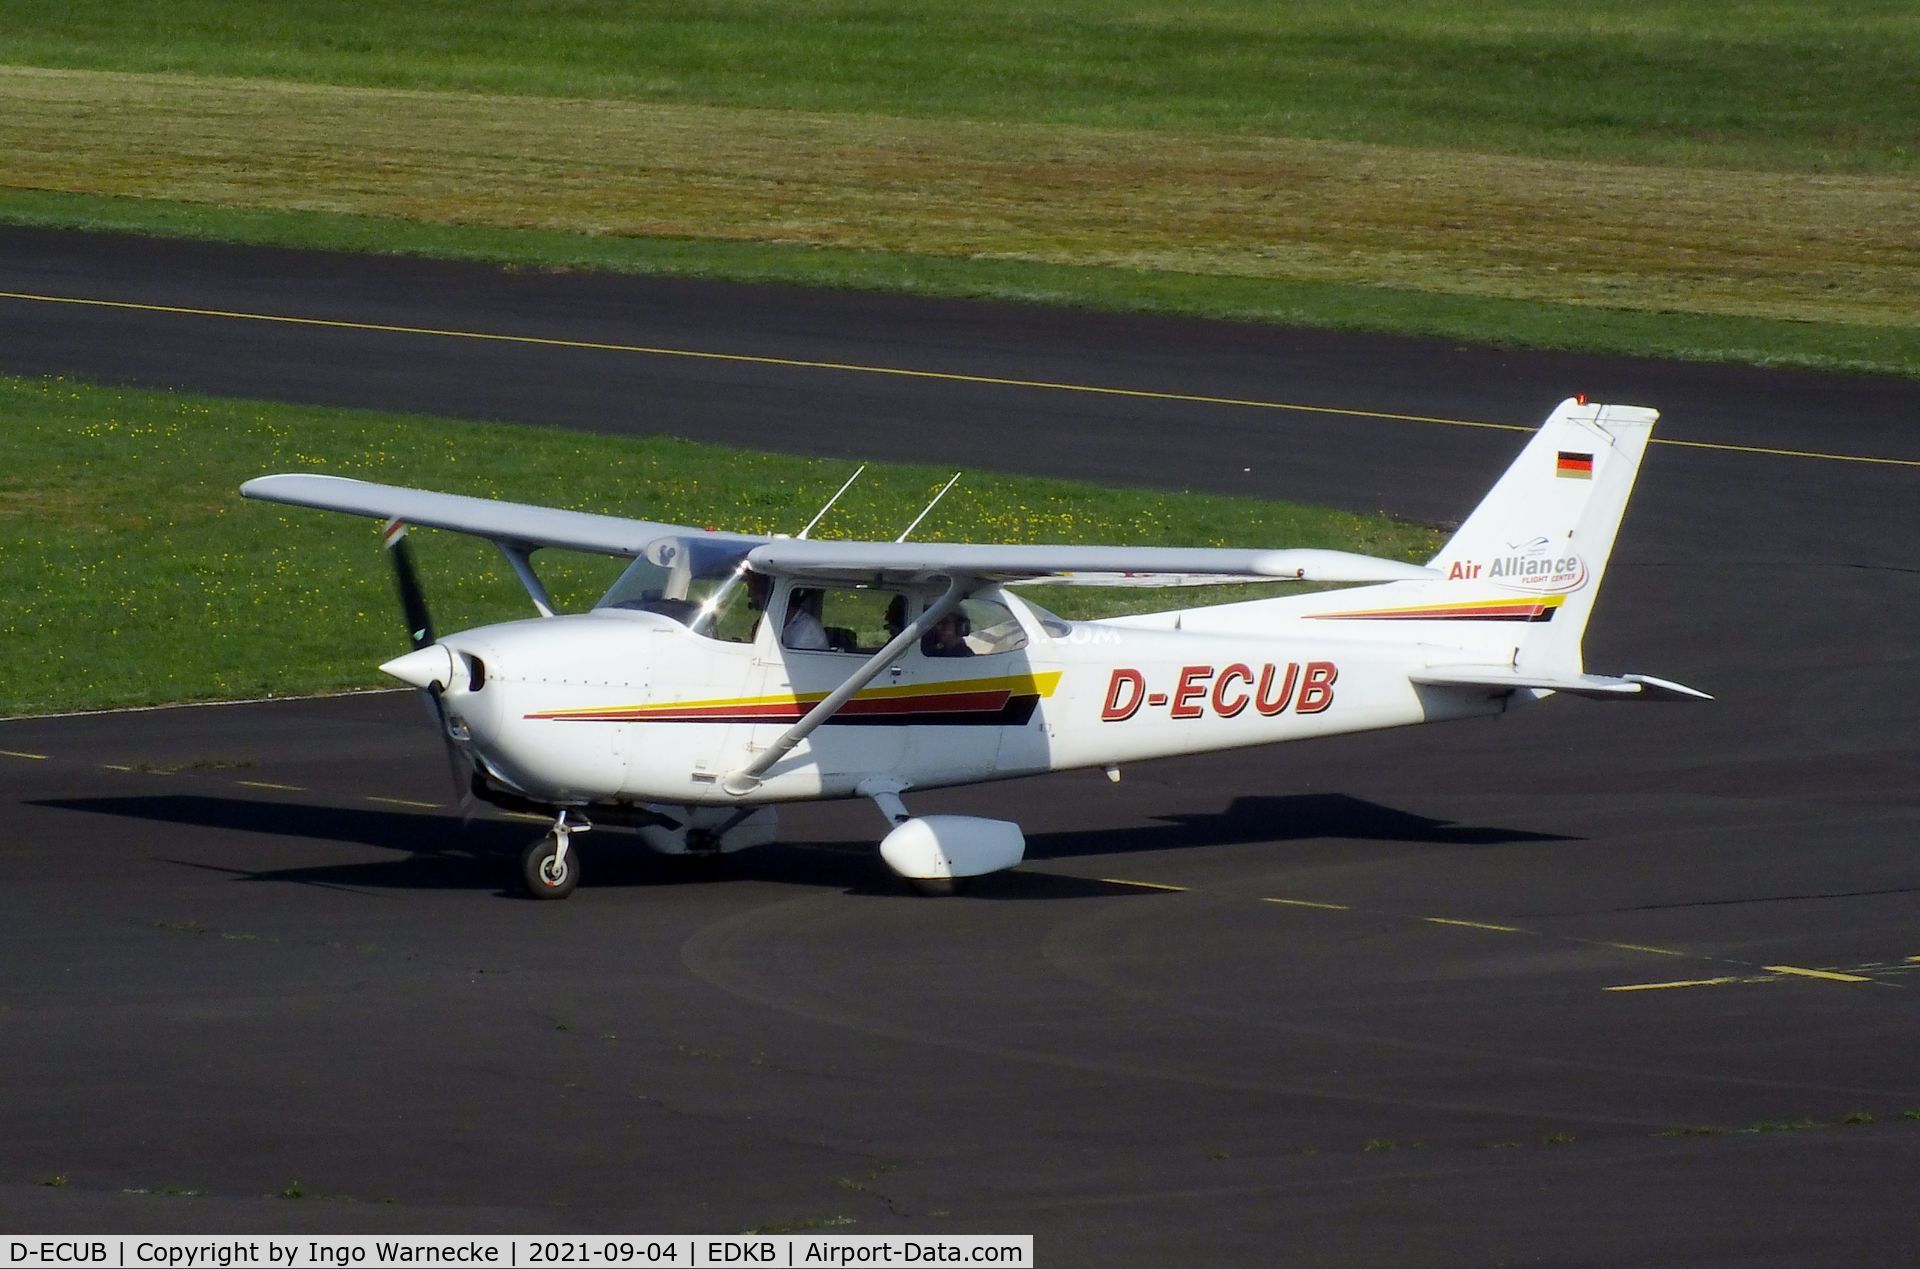 D-ECUB, 1979 Reims F172N Skyhawk C/N 1823, Cessna (Reims) F172N at Bonn-Hangelar airfield during the Grumman Fly-in 2021